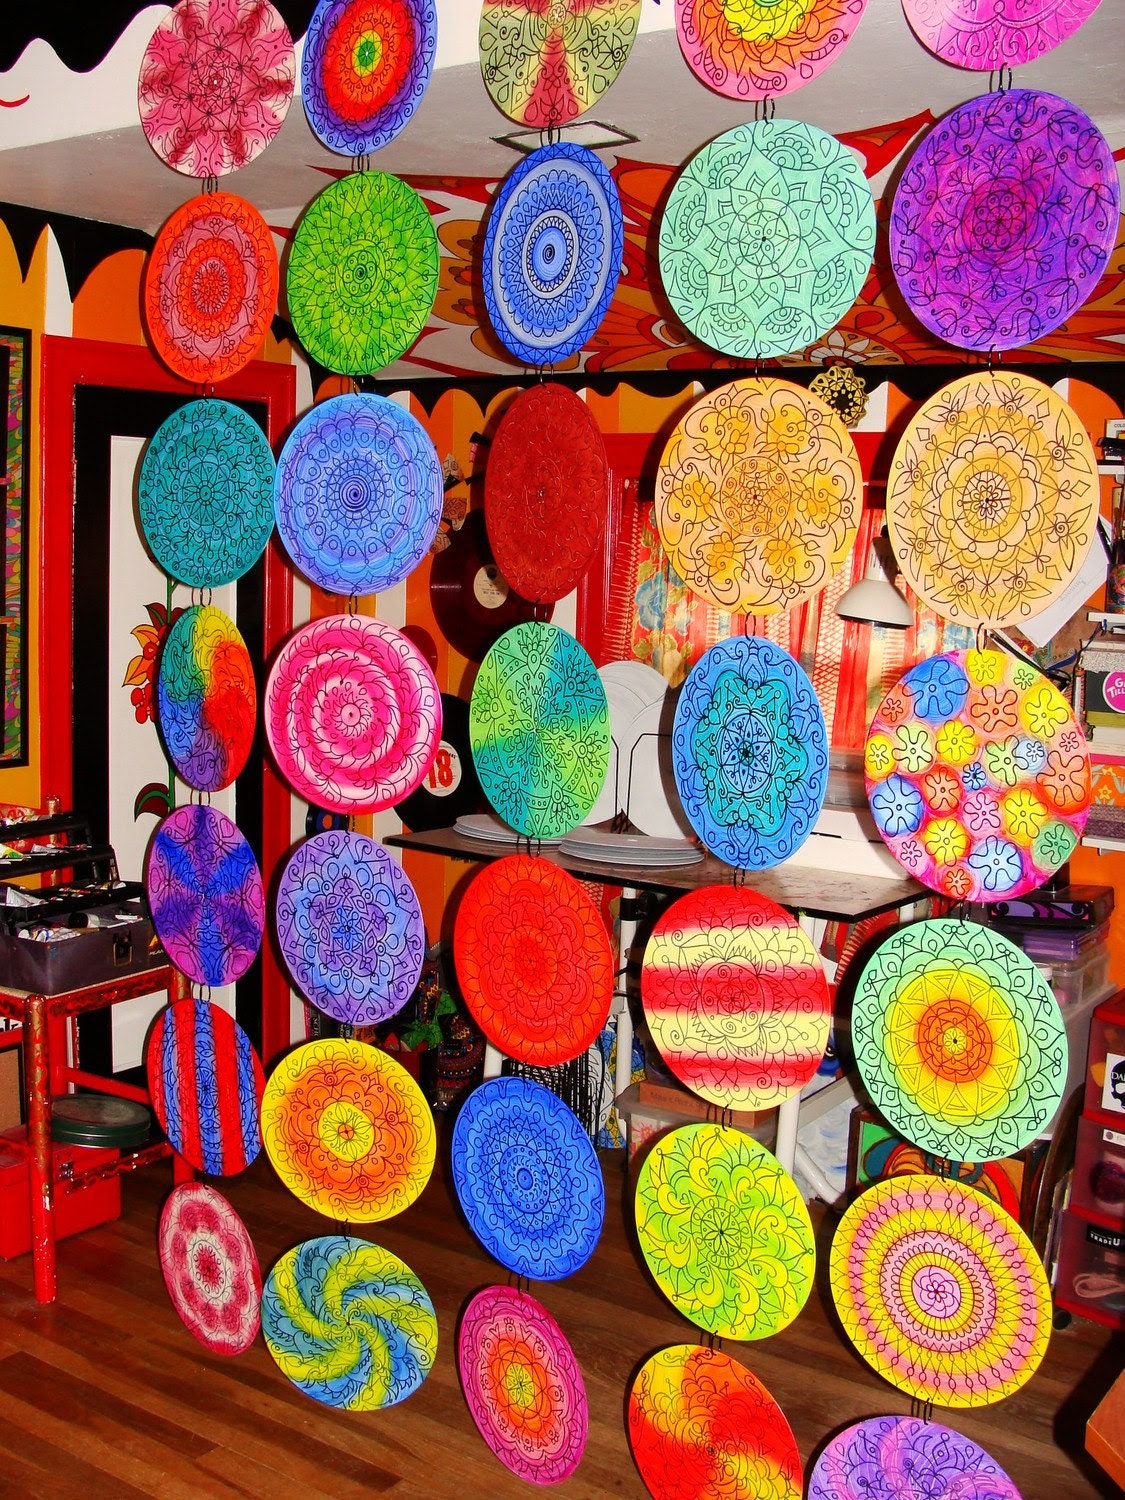 Custom Mandala Room Divider made from 35 Painted Vinyl Records - Tribal Inspired Geometry